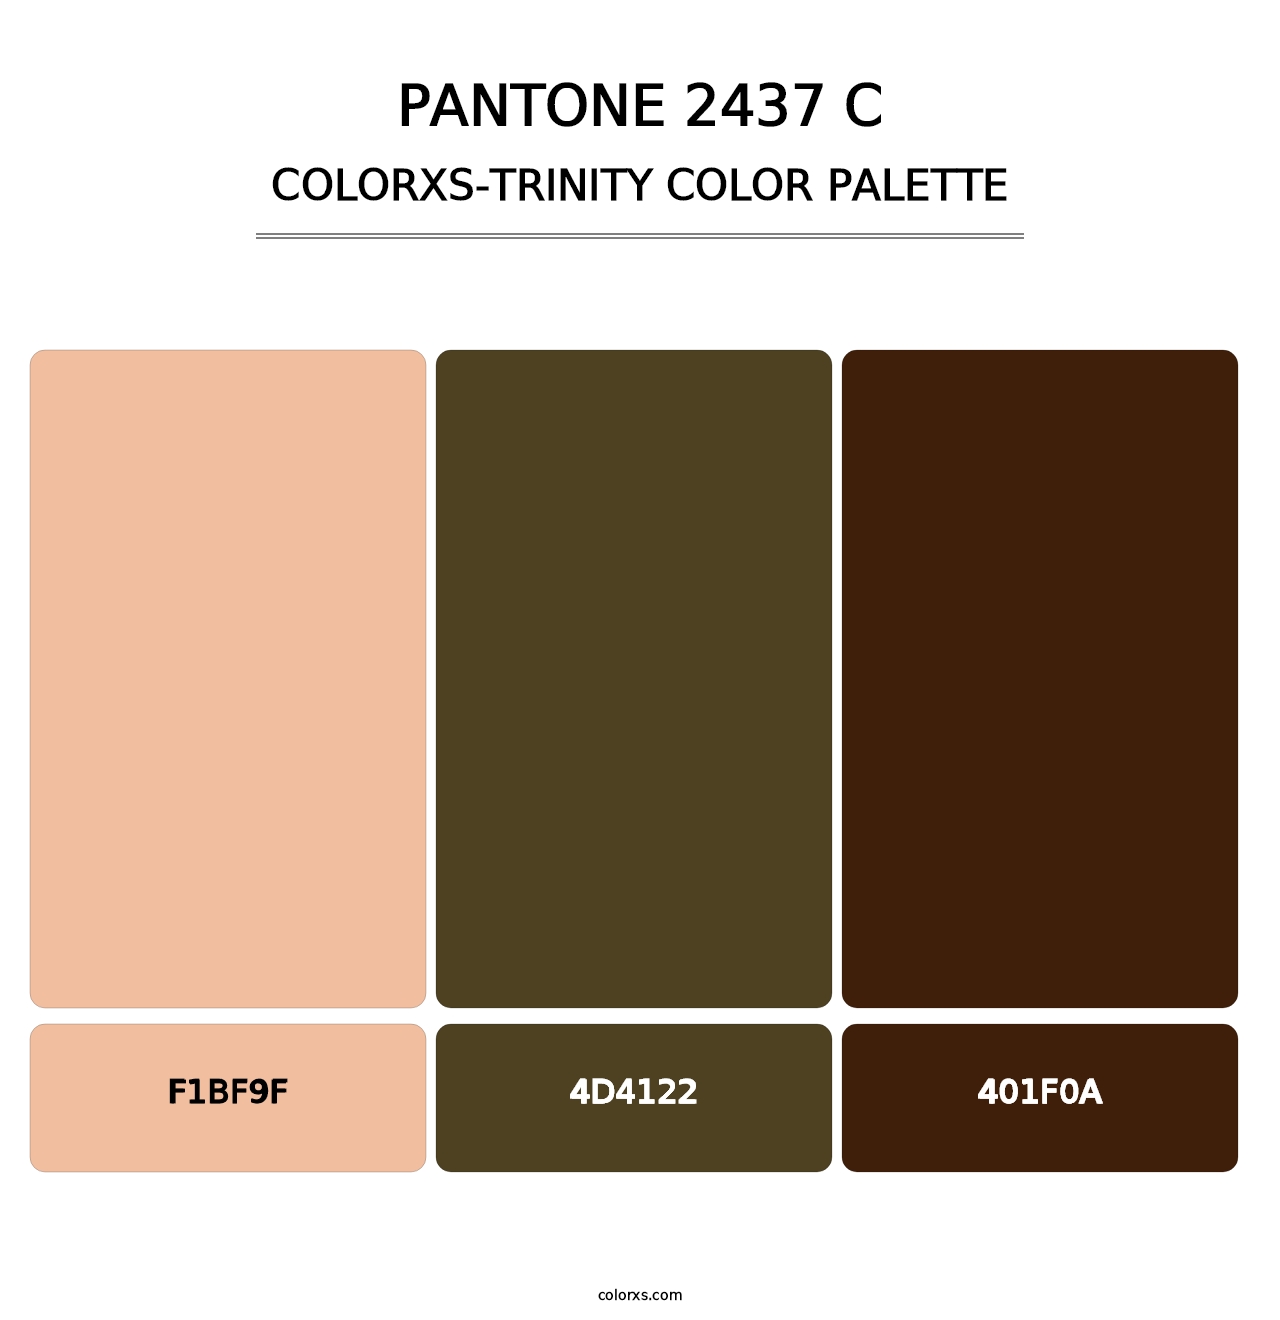 PANTONE 2437 C - Colorxs Trinity Palette